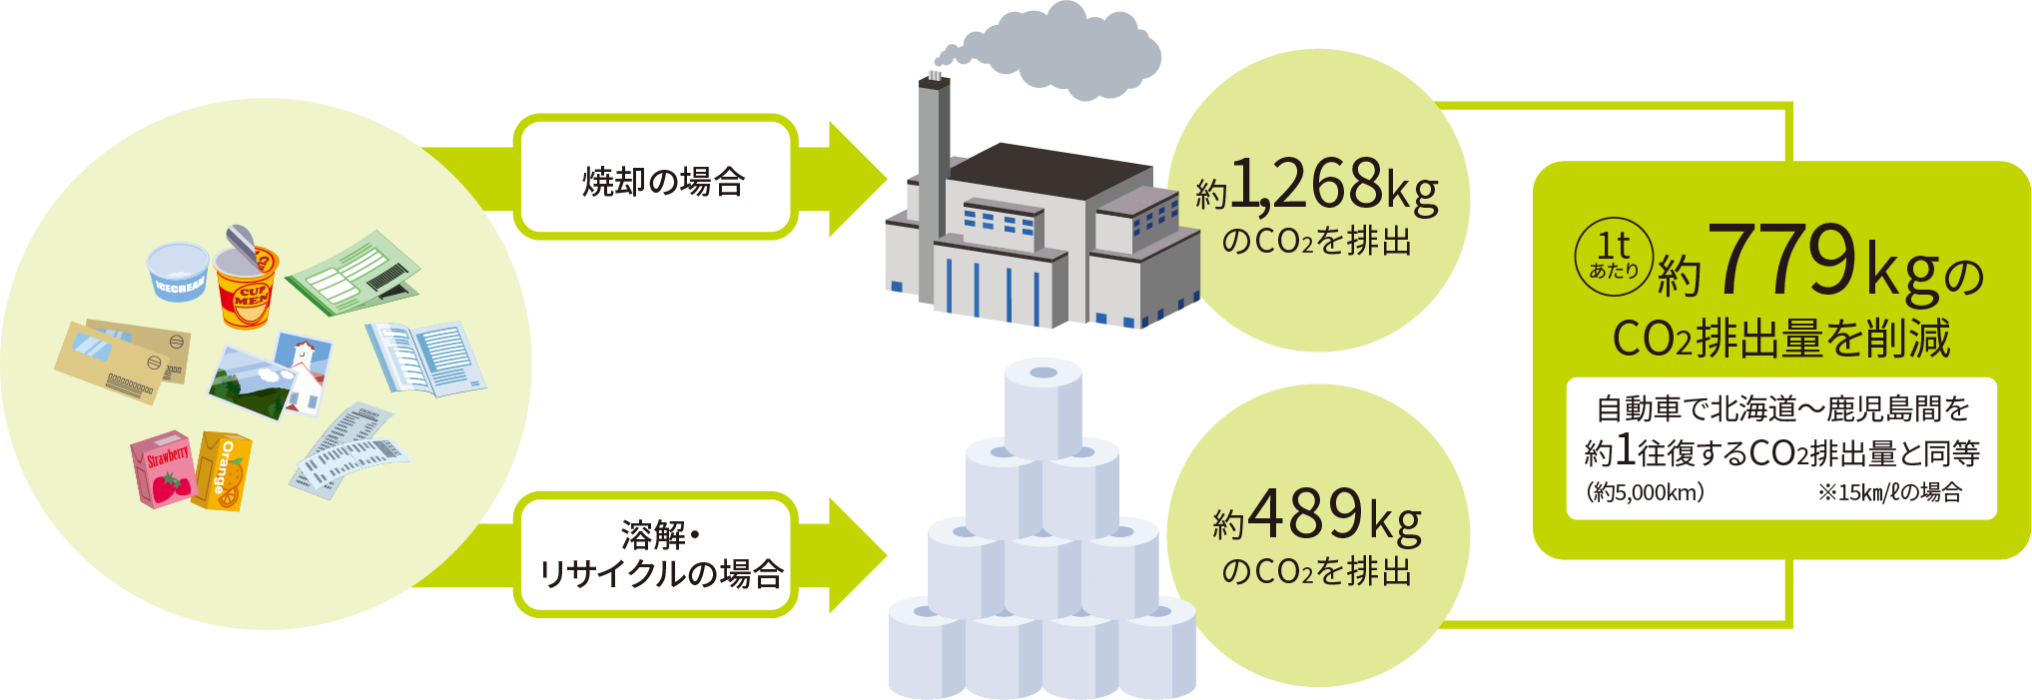 1tあたり約779kgのCO2排出量を削減（自動車で北海道～鹿児島間を約１往復するCO2排出量と同等）